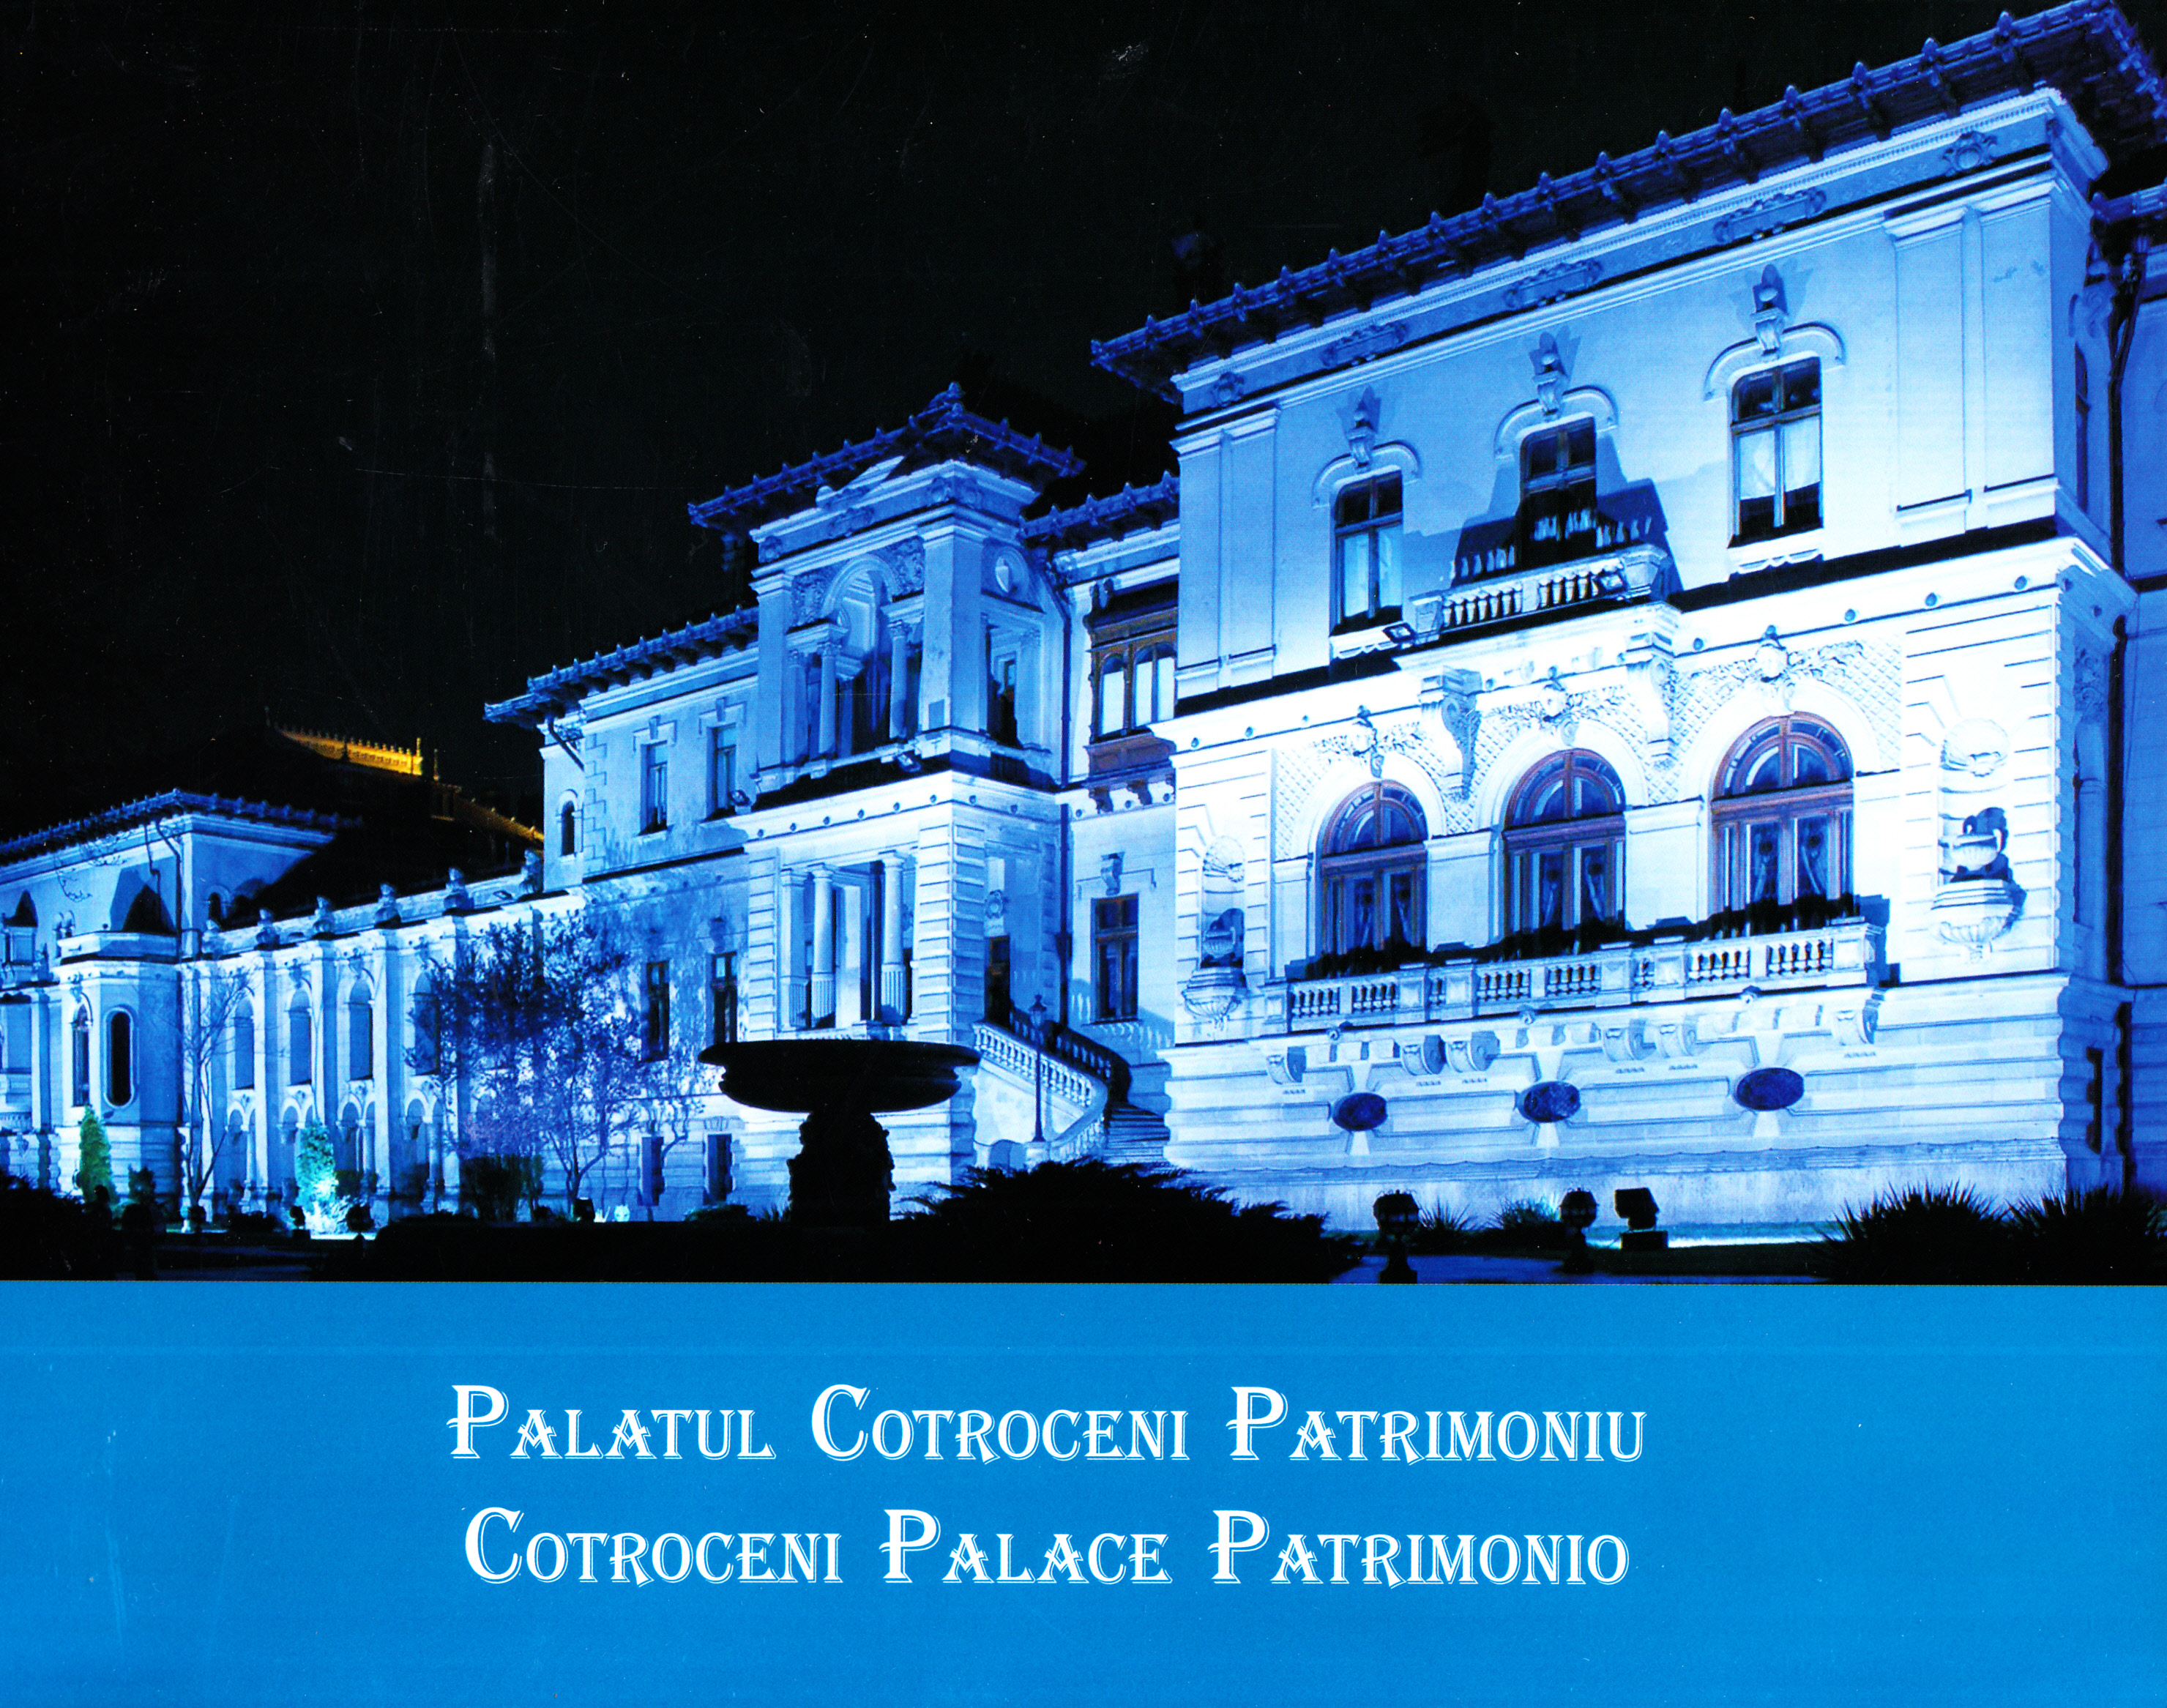 Palatul Cotroceni Patrimoniu